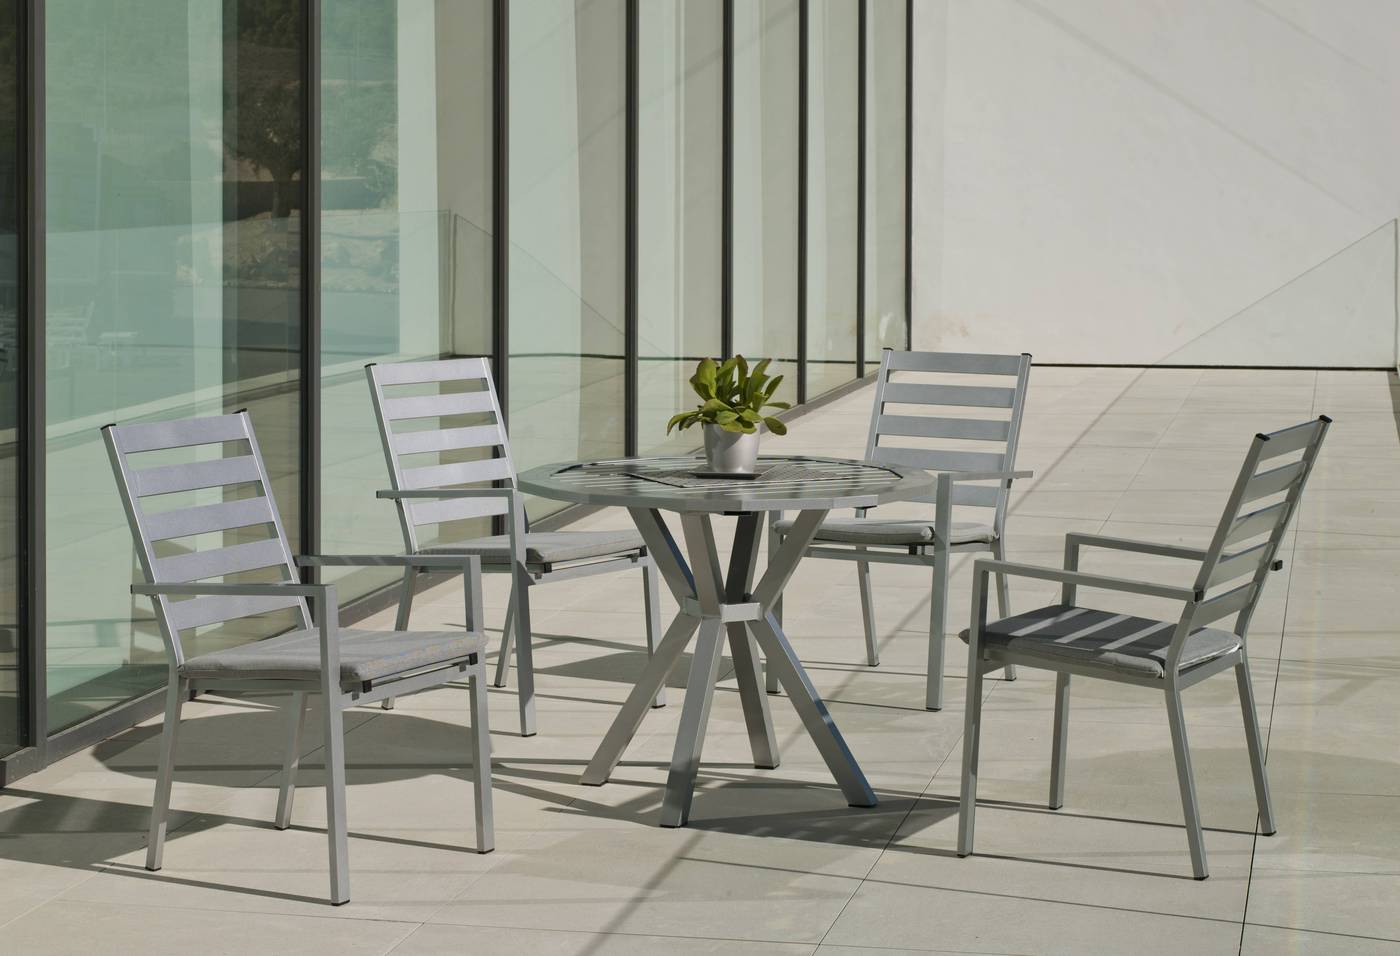 Moderno conjunto de aluminio luxe: Mesa de comedor poligonal de 110 cm. + 4 sillones de aluminio. Disponible en color blanco, antracita, champagne, plata o marrón.